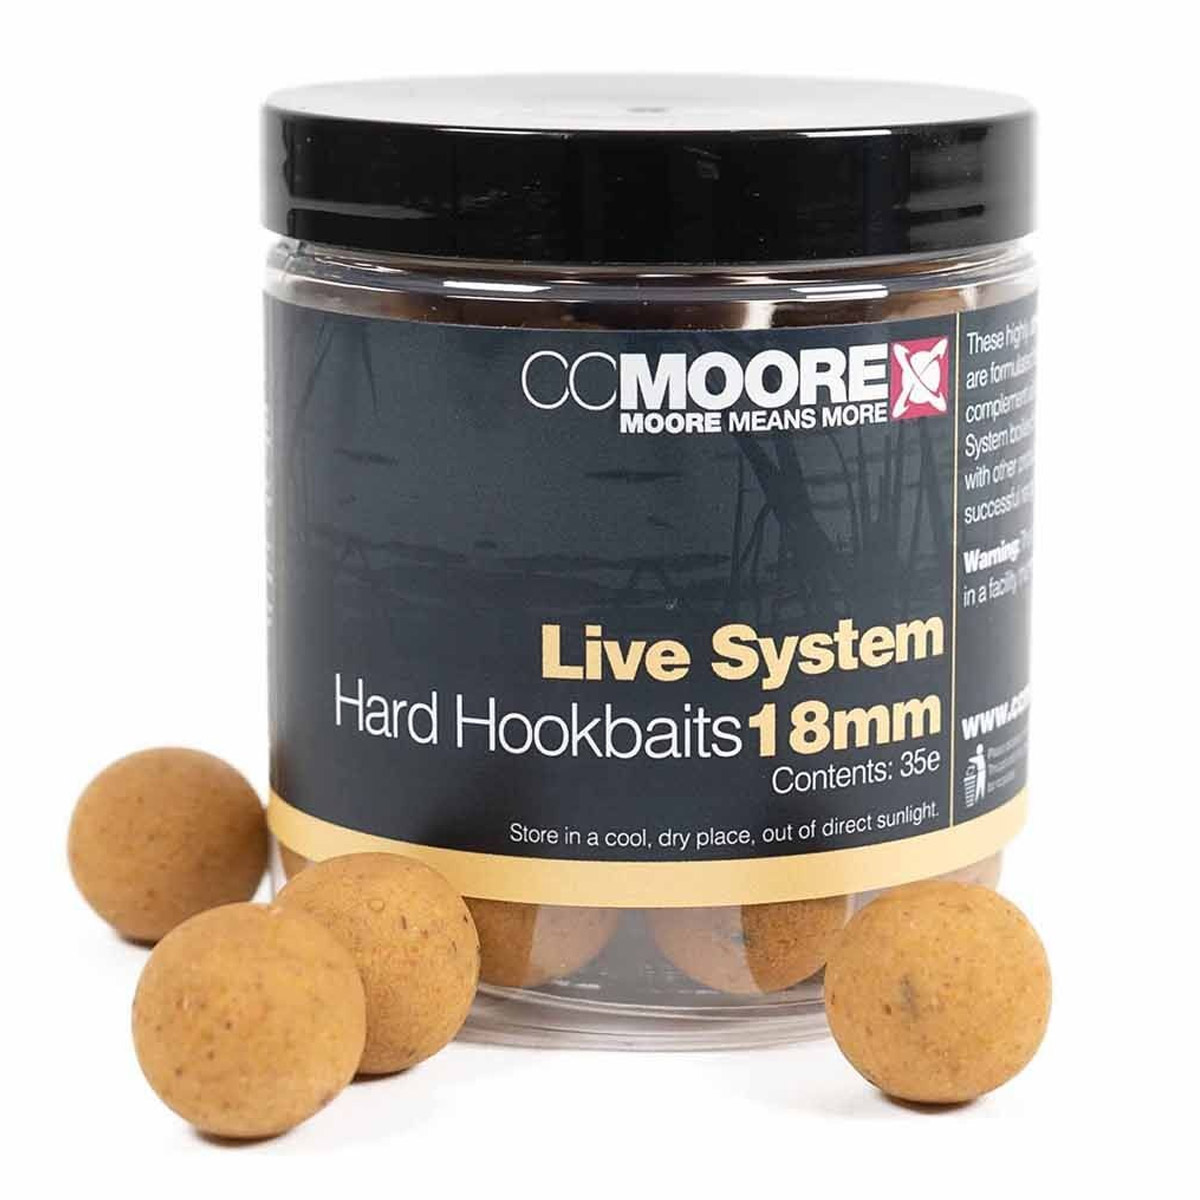 Cc Moore Live System Hard Hookbaits 18 mm